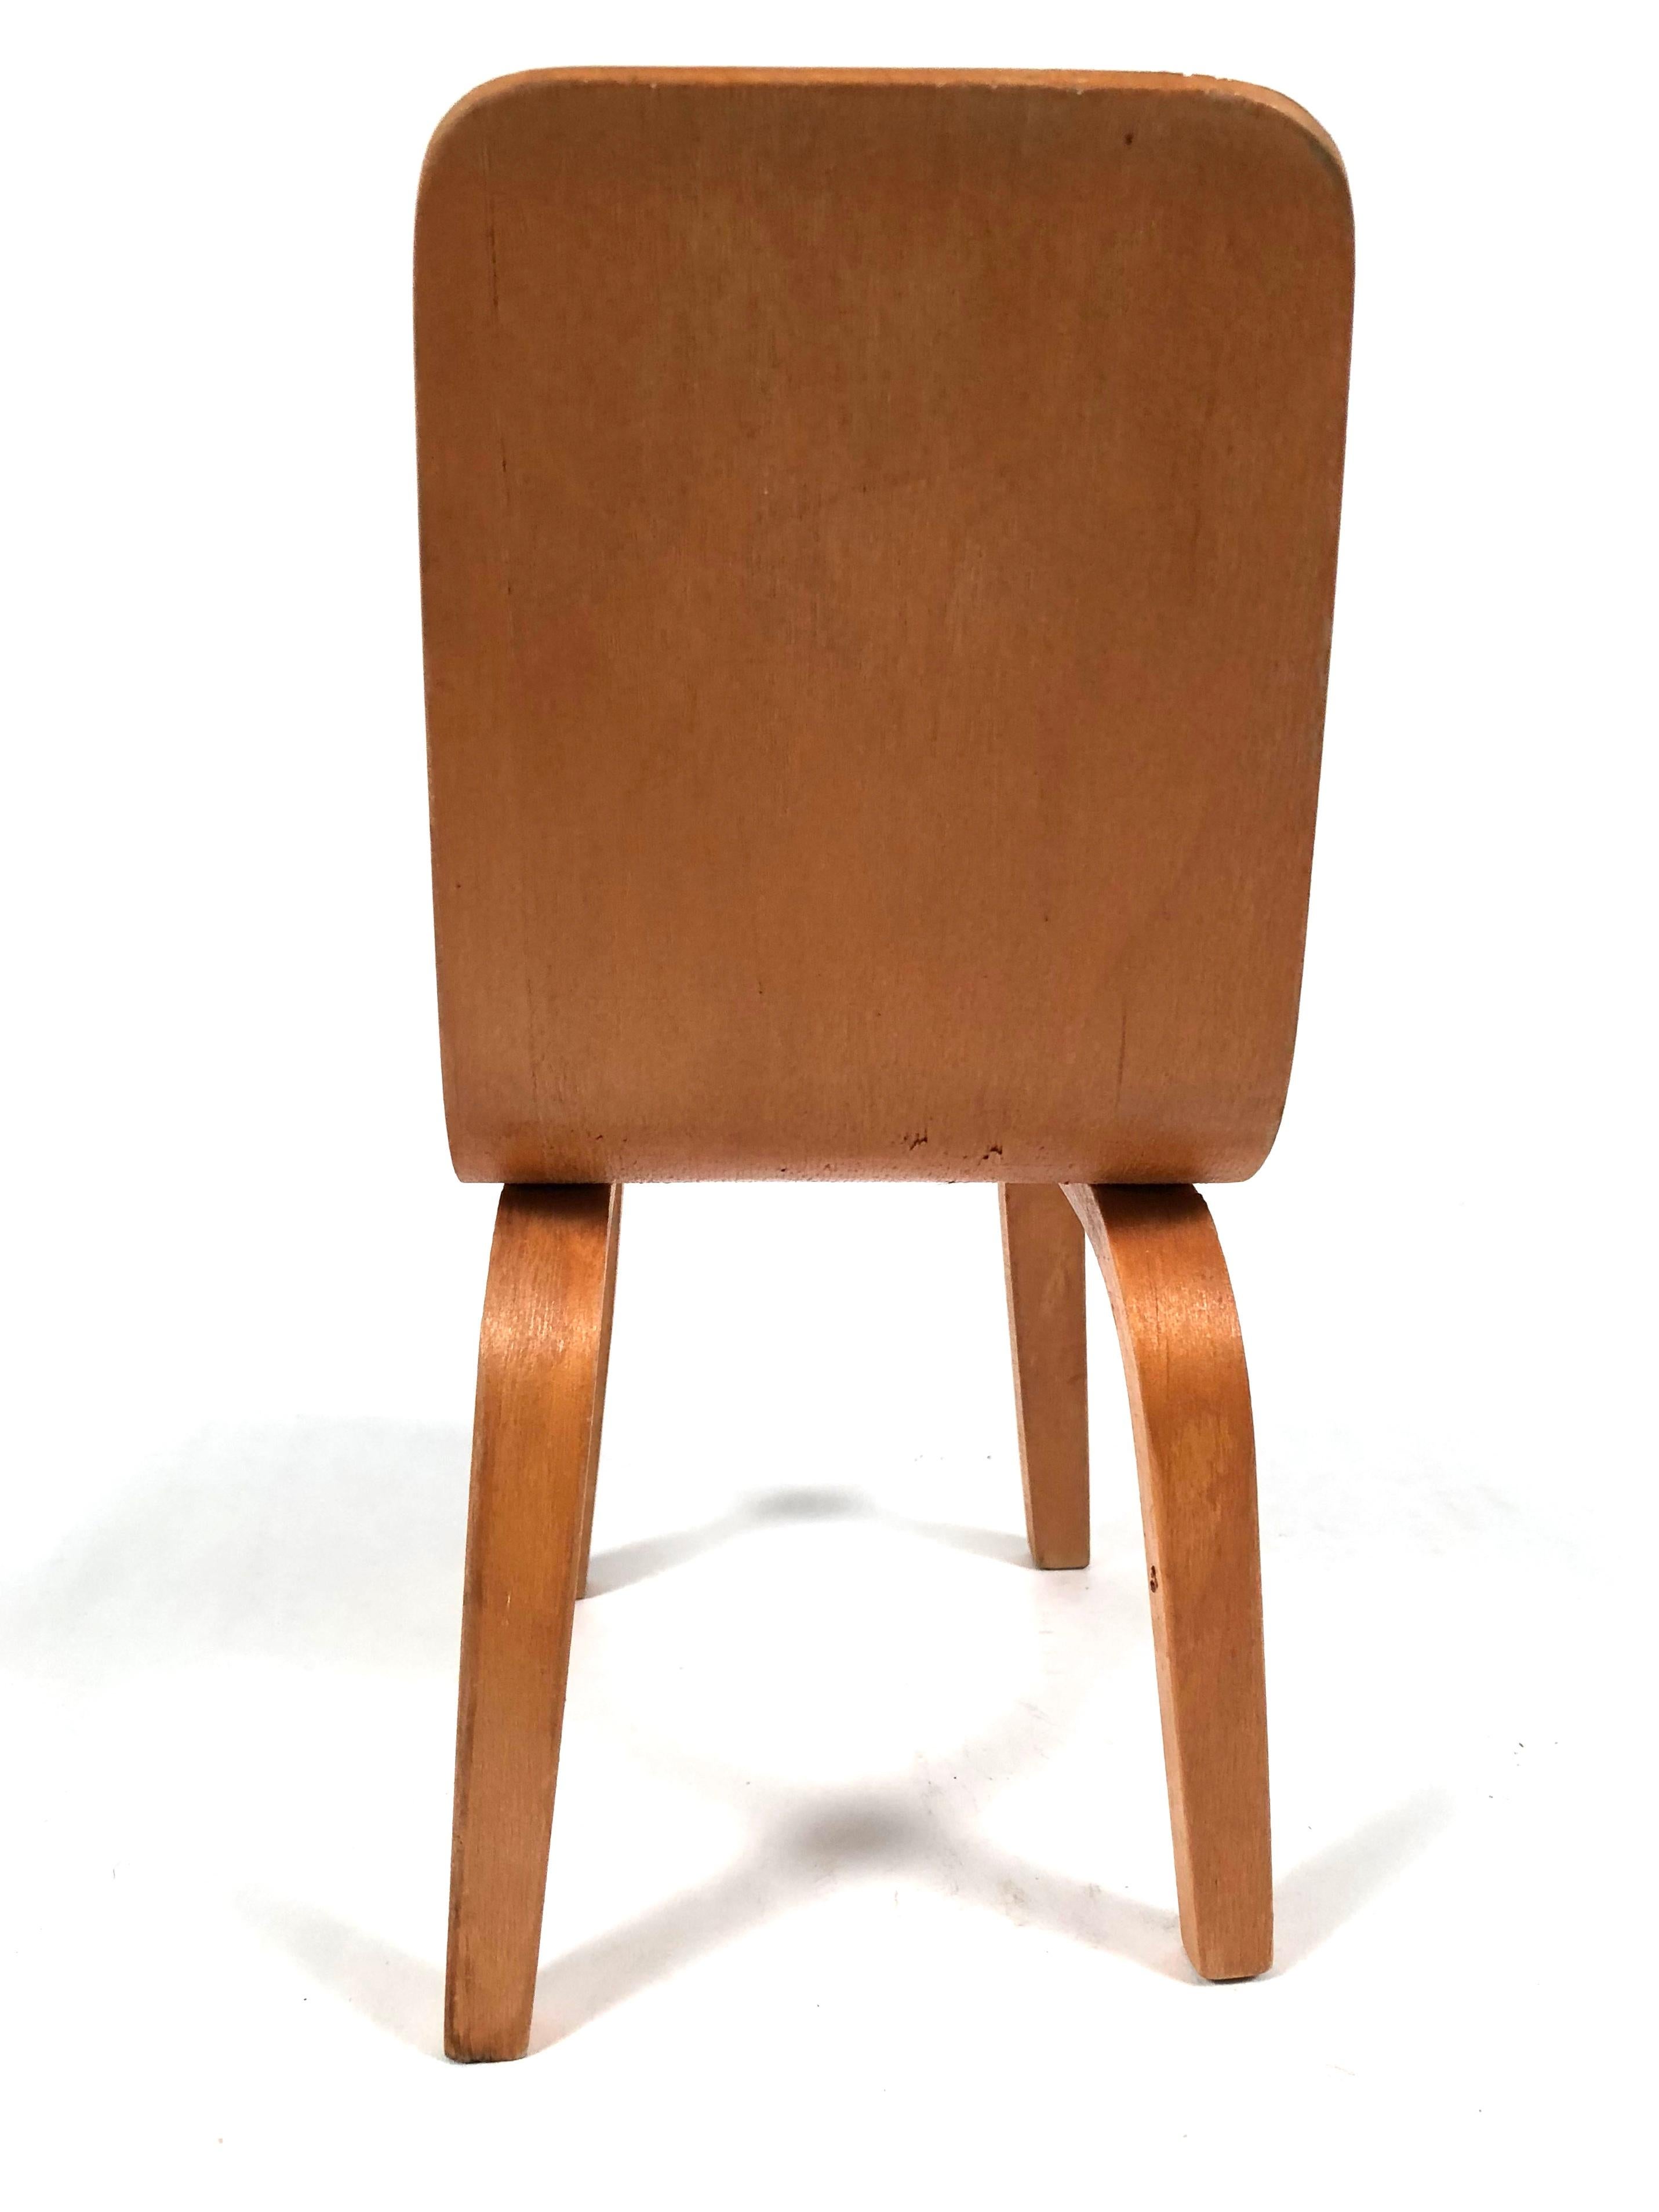 Russian Bentwood Chair Salesman's Model 1